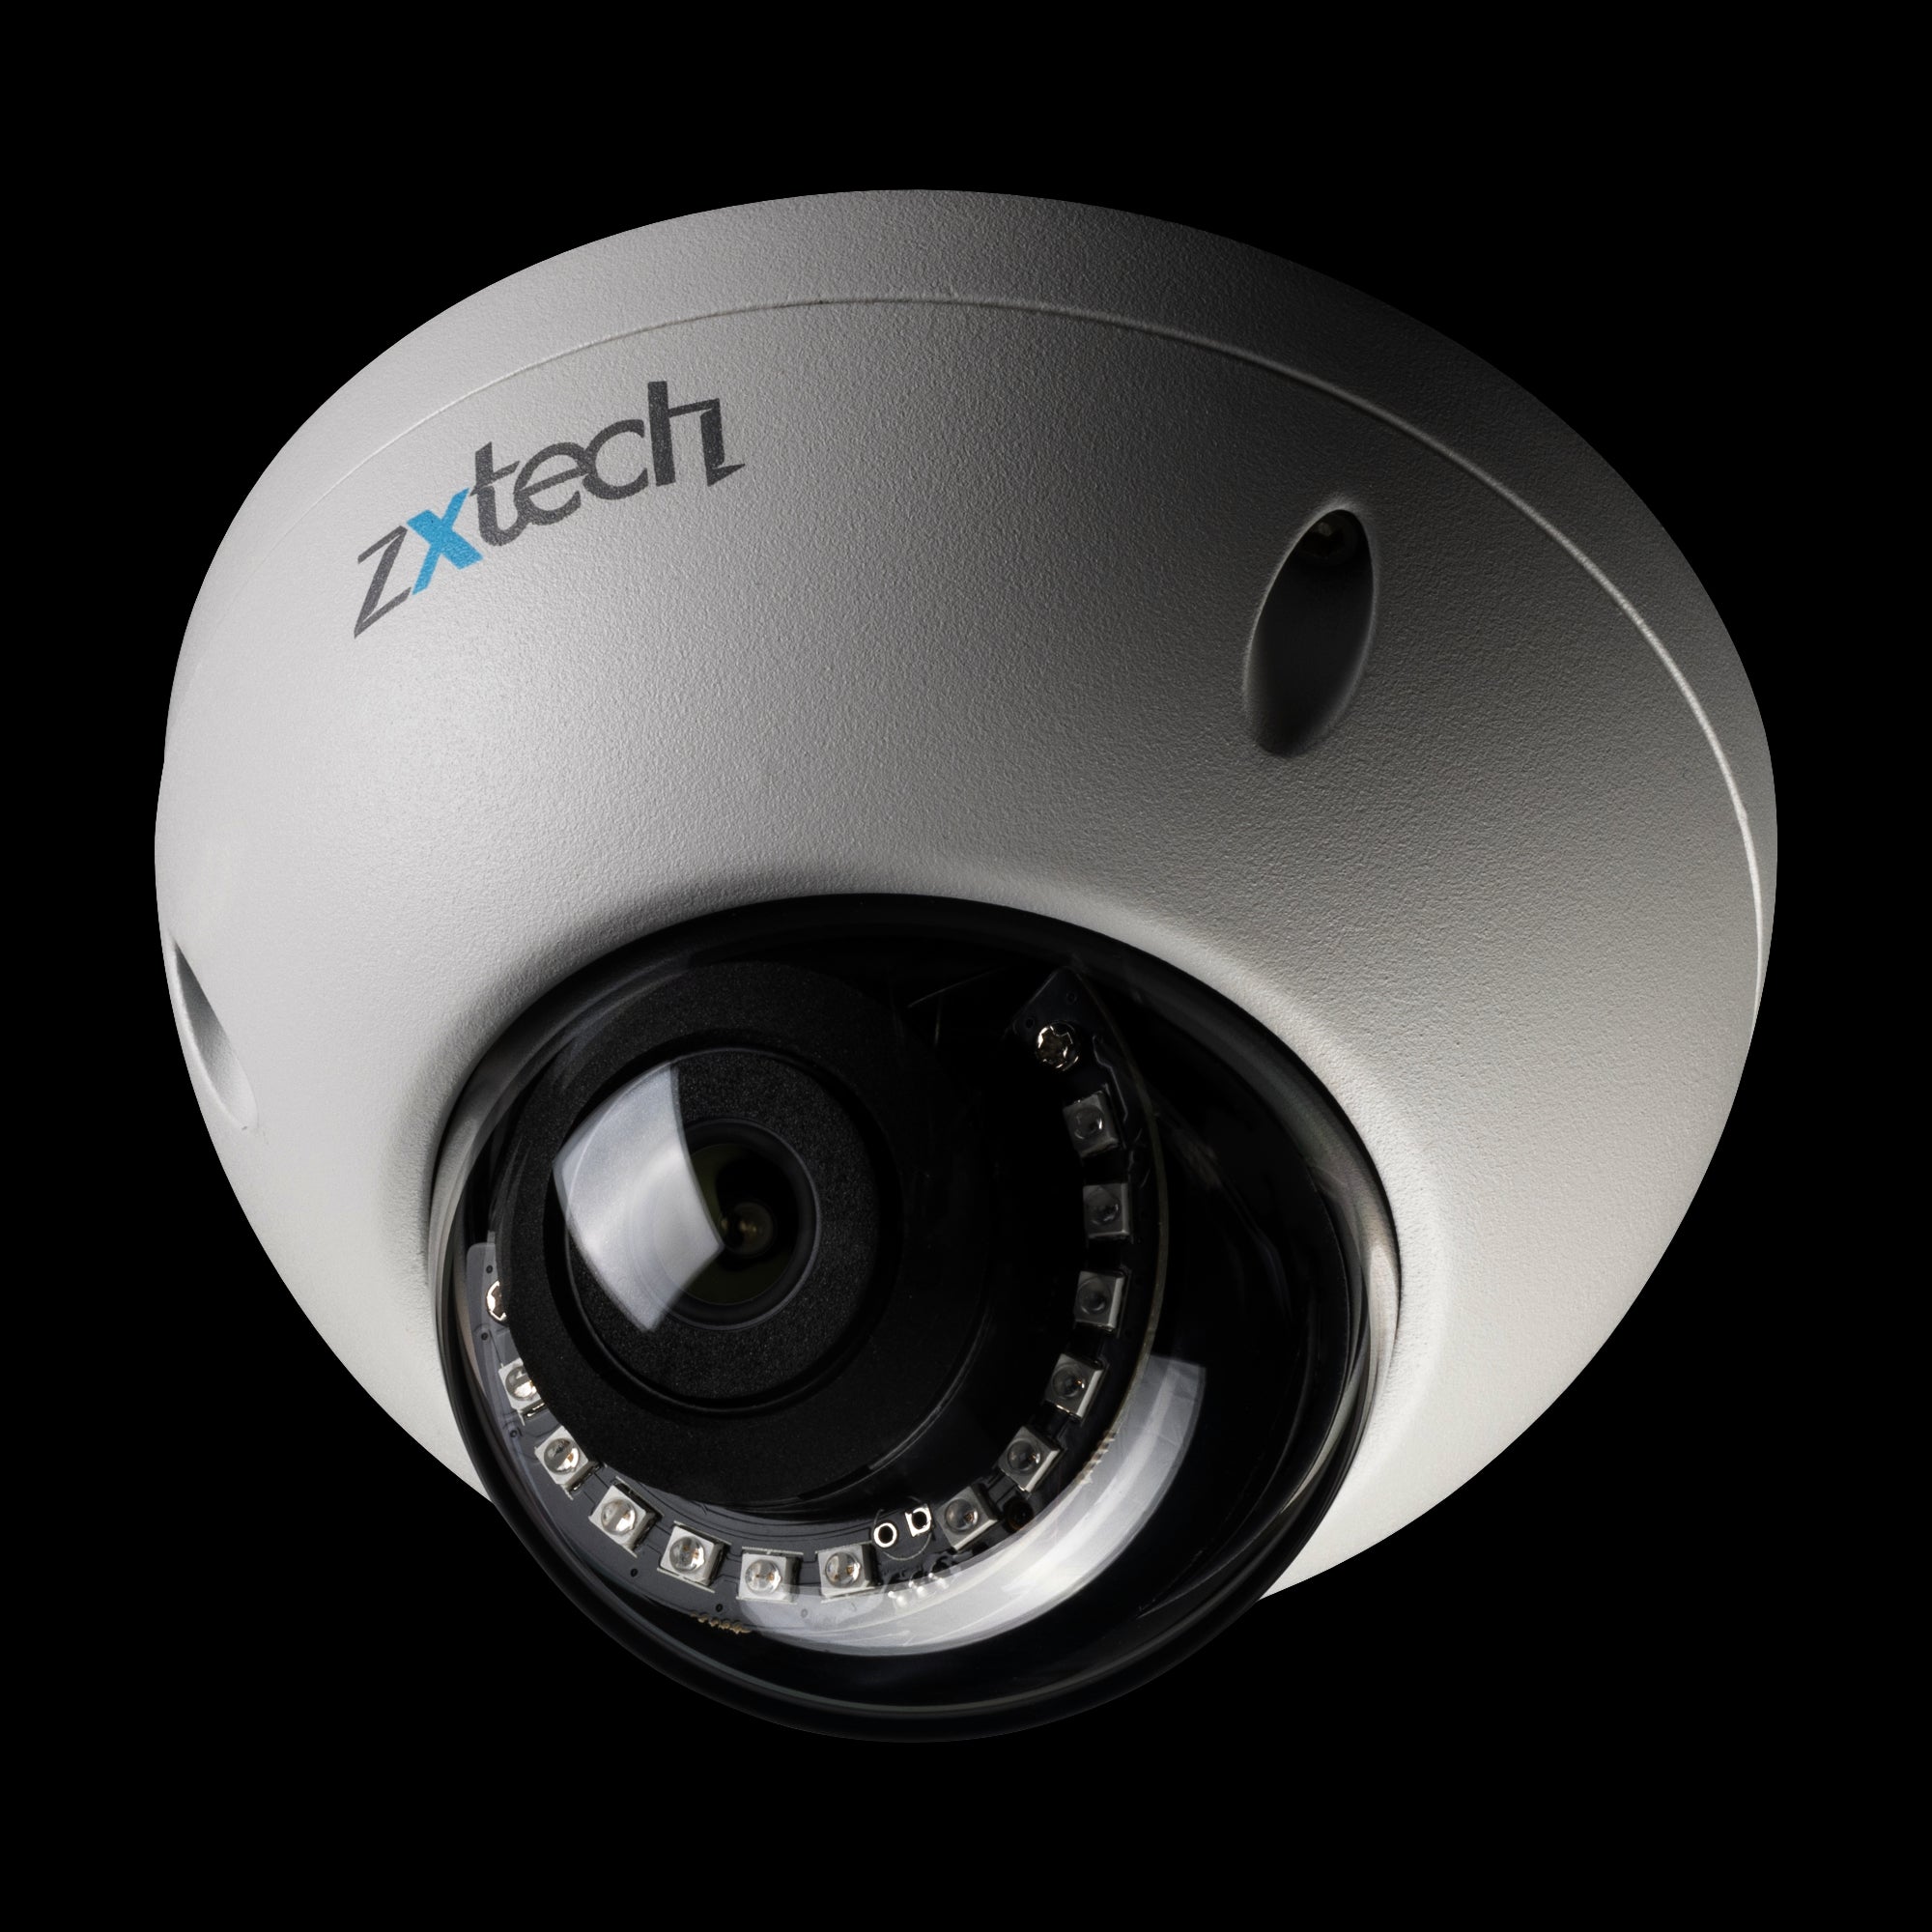 Zxtech IK10 4K CCTV System - 16 x IP PoE Cameras Face Detection Outdoor Sony Starvis Enhanced Night Vision  | IK16A16X